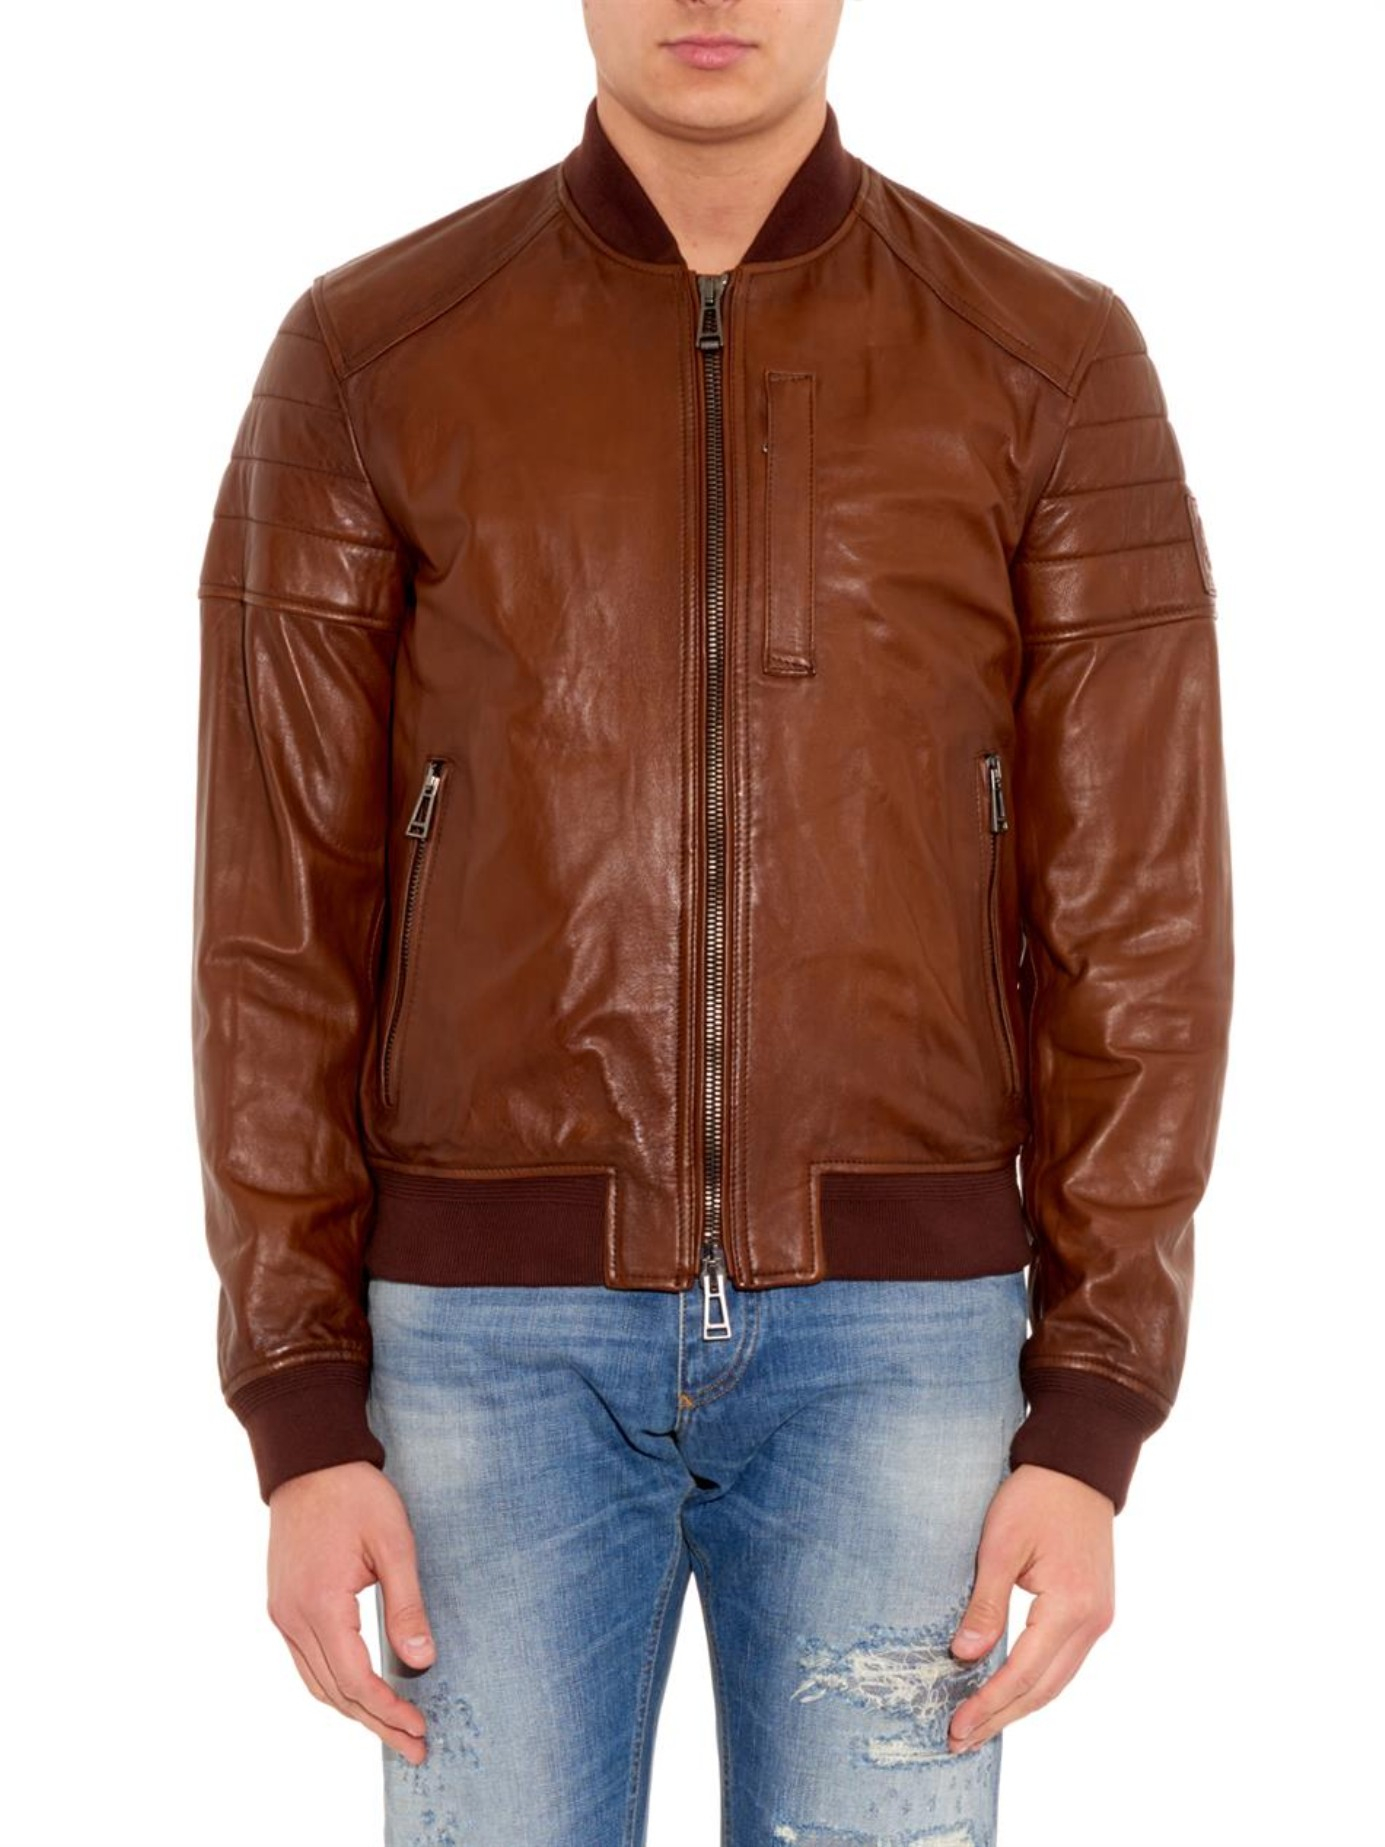 Lyst - Belstaff Stockdale Leather Bomber Jacket in Brown for Men